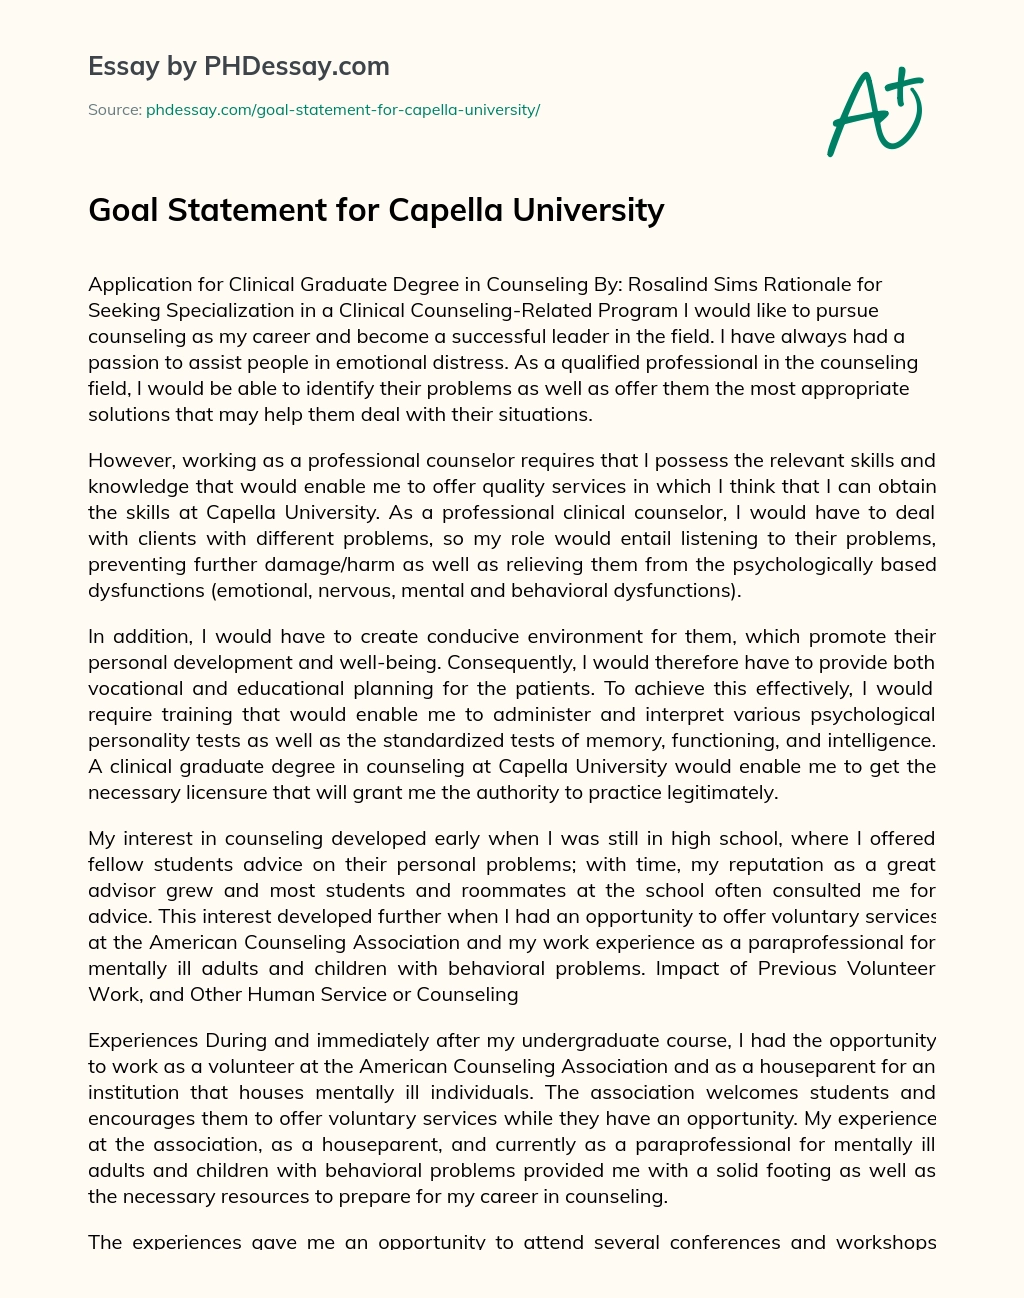 Goal Statement for Capella University essay